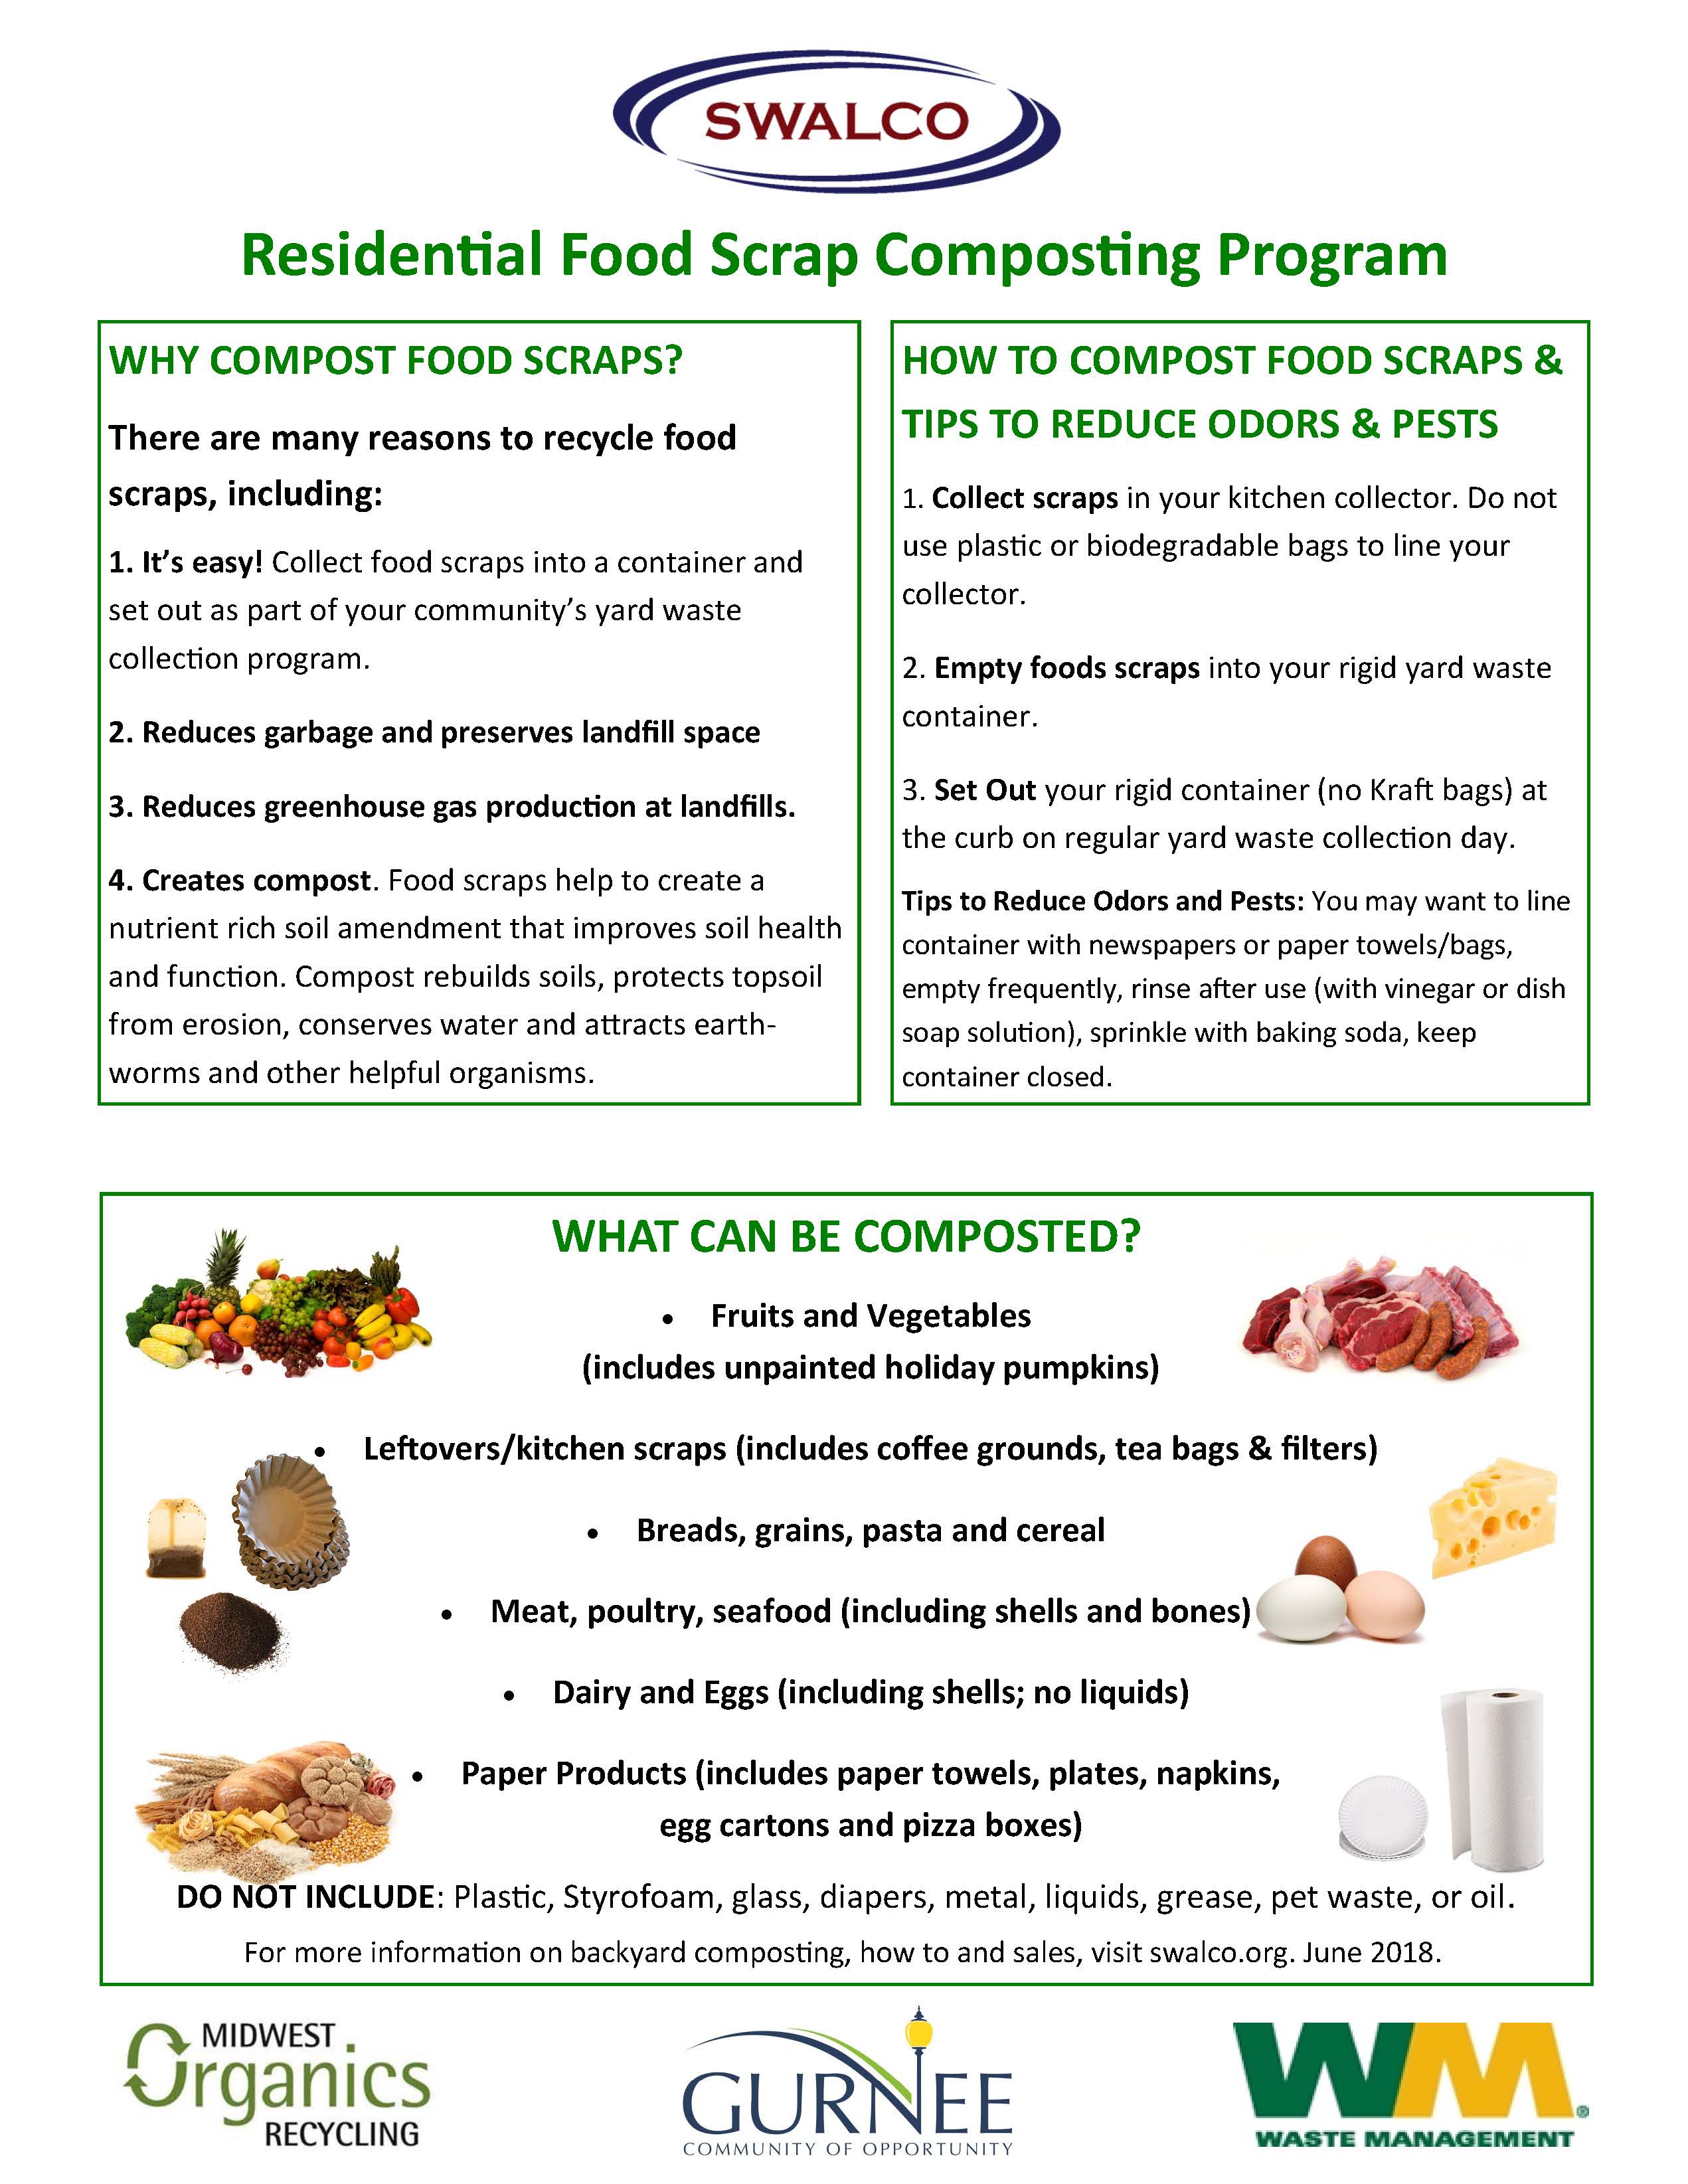 Voluntary Residential Food Scraps Recycling Program Begins July 1st